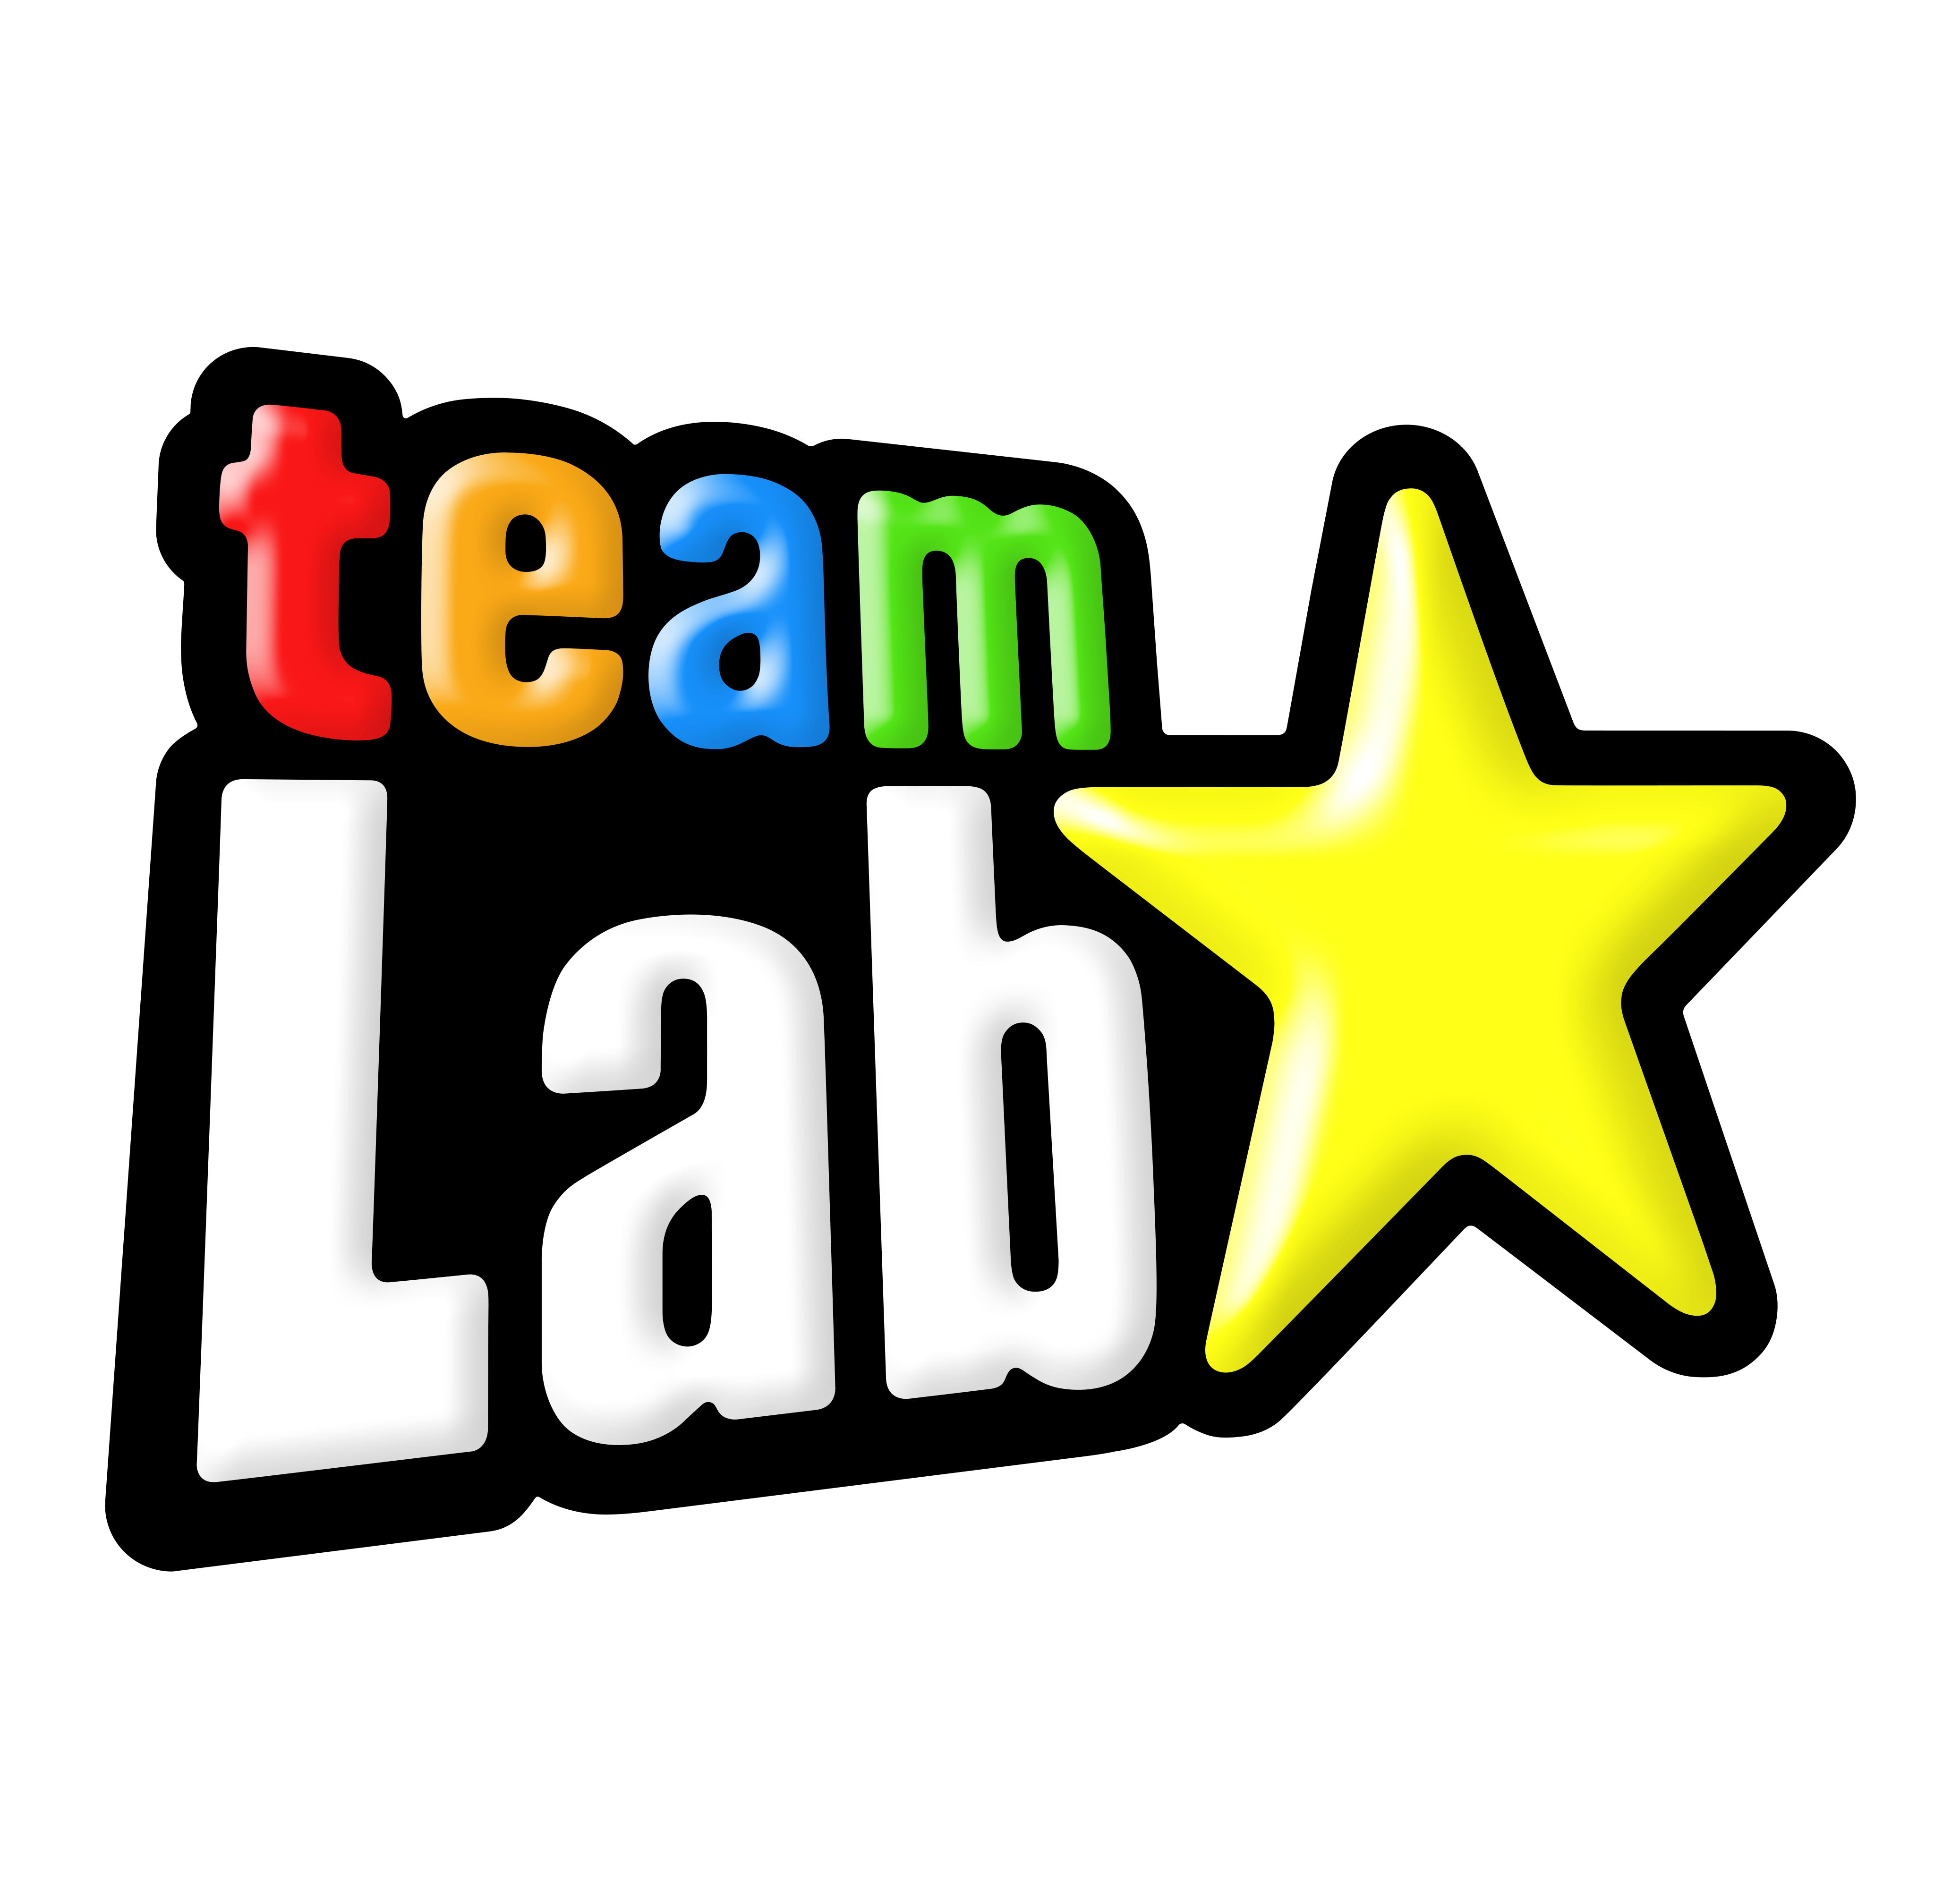 teamlab logo